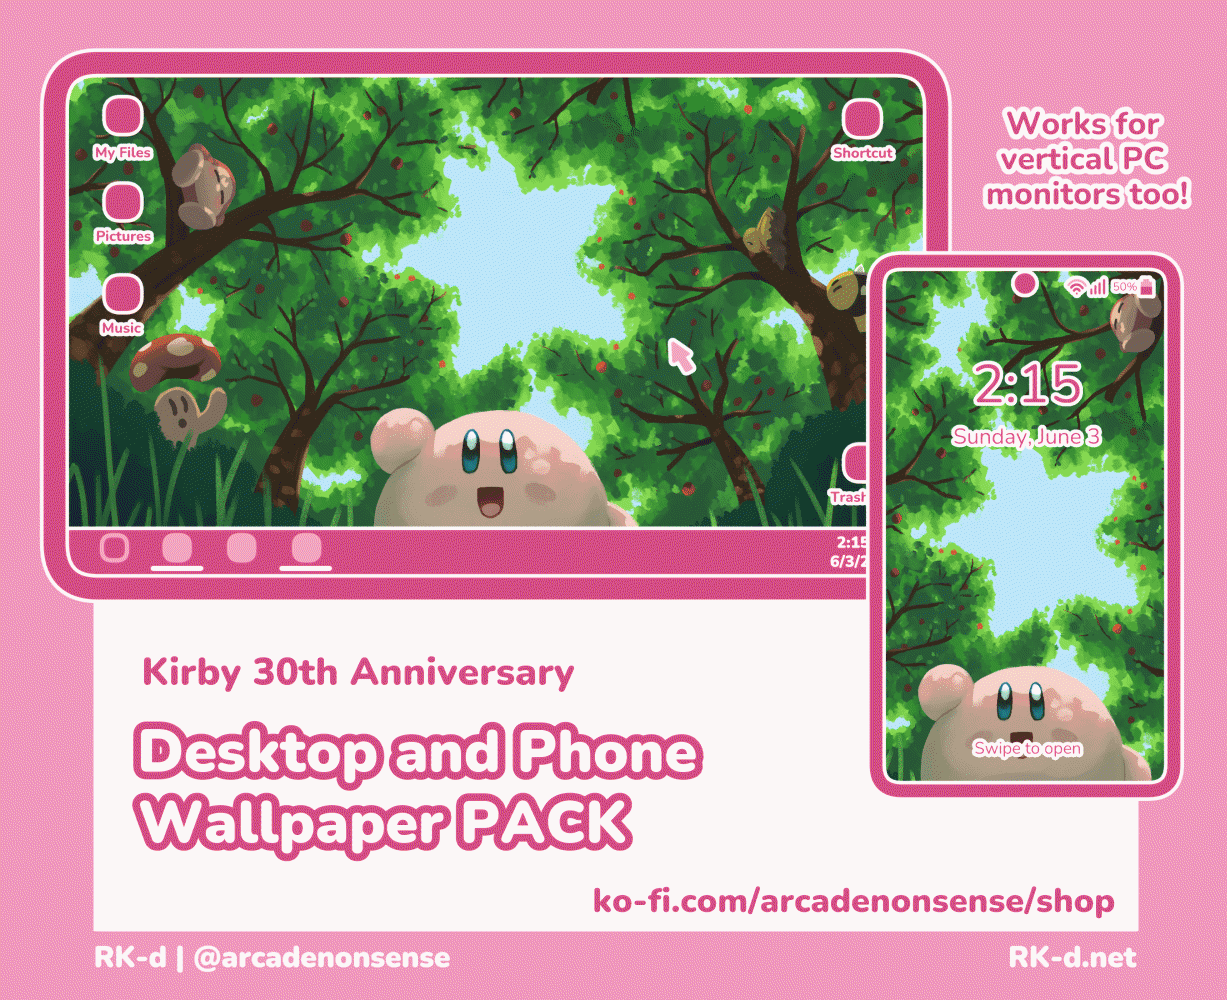 Wallpaper - Kirby's 25th Anniversary, Rewards